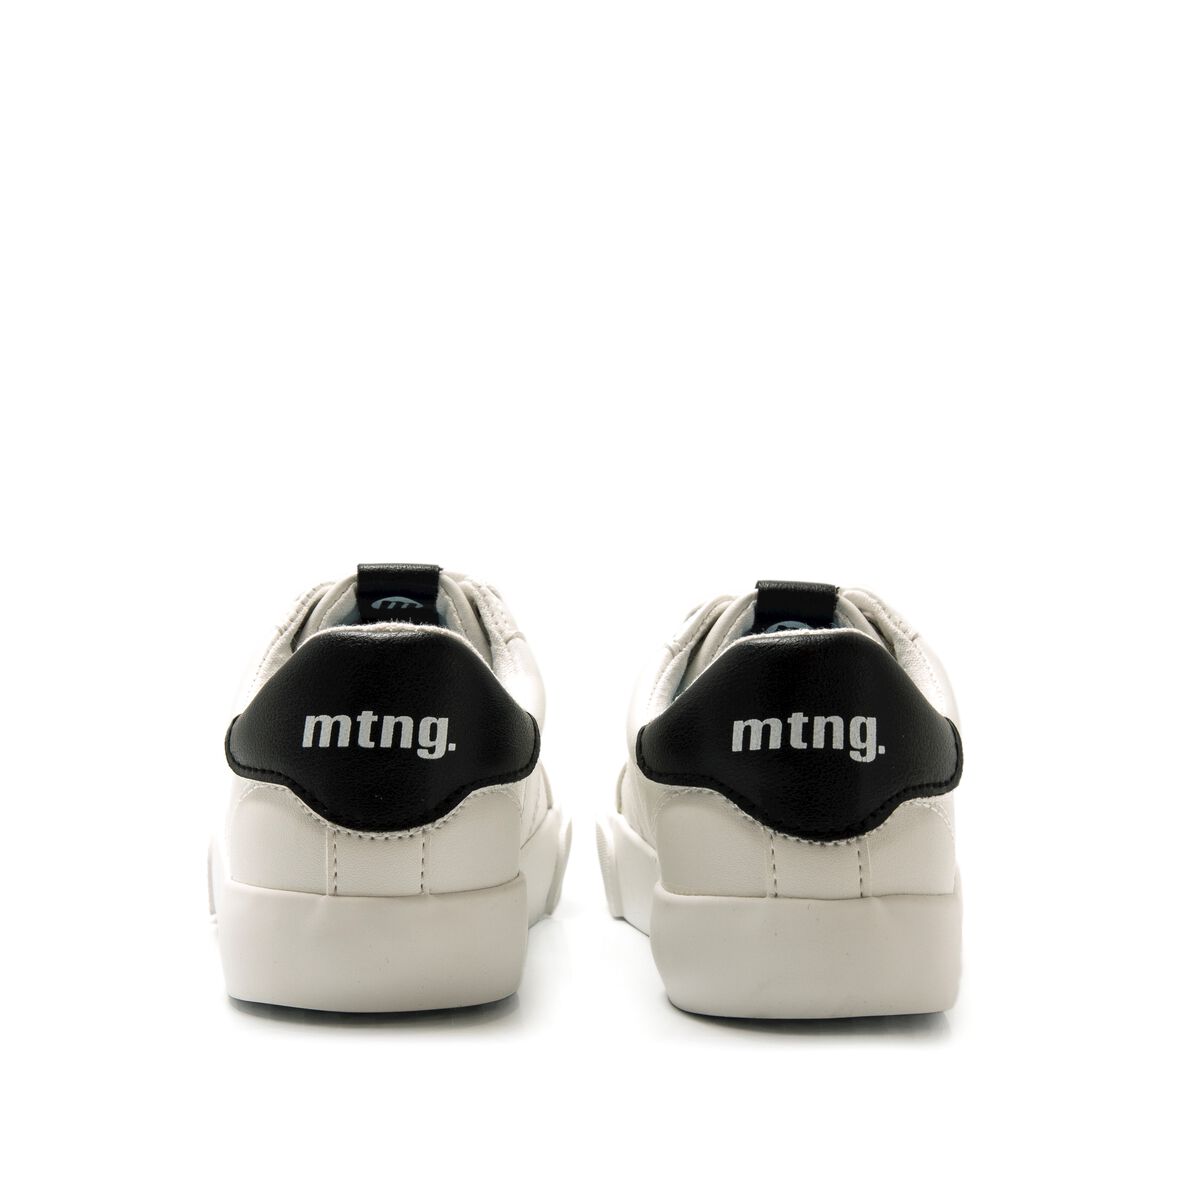 Zapatillas de Nino modelo EMI de MTNG image number 3